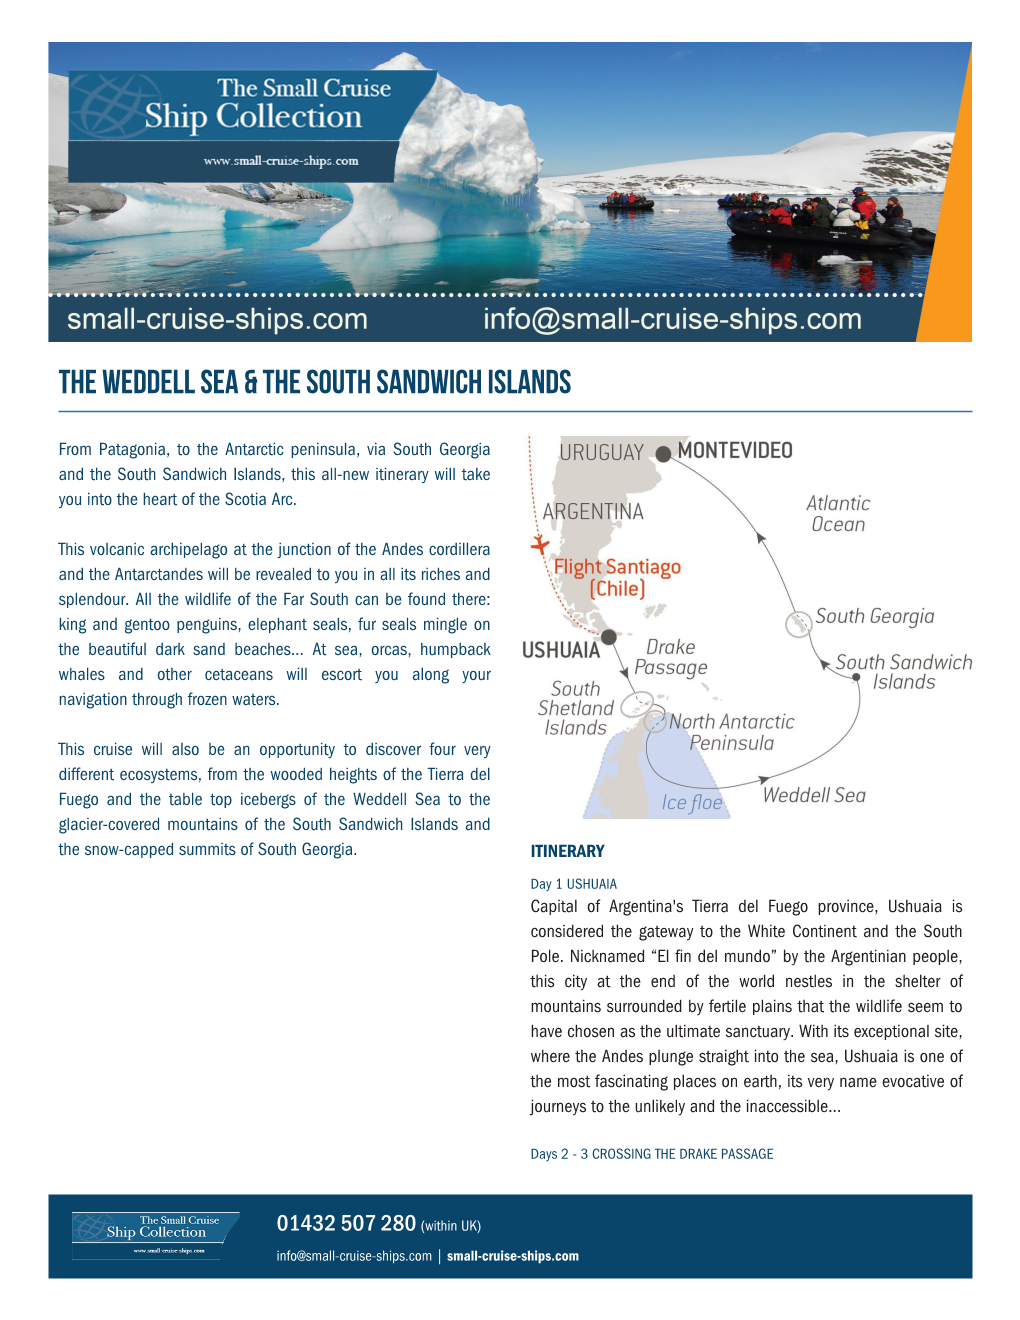 The Weddell Sea & the South Sandwich Islands